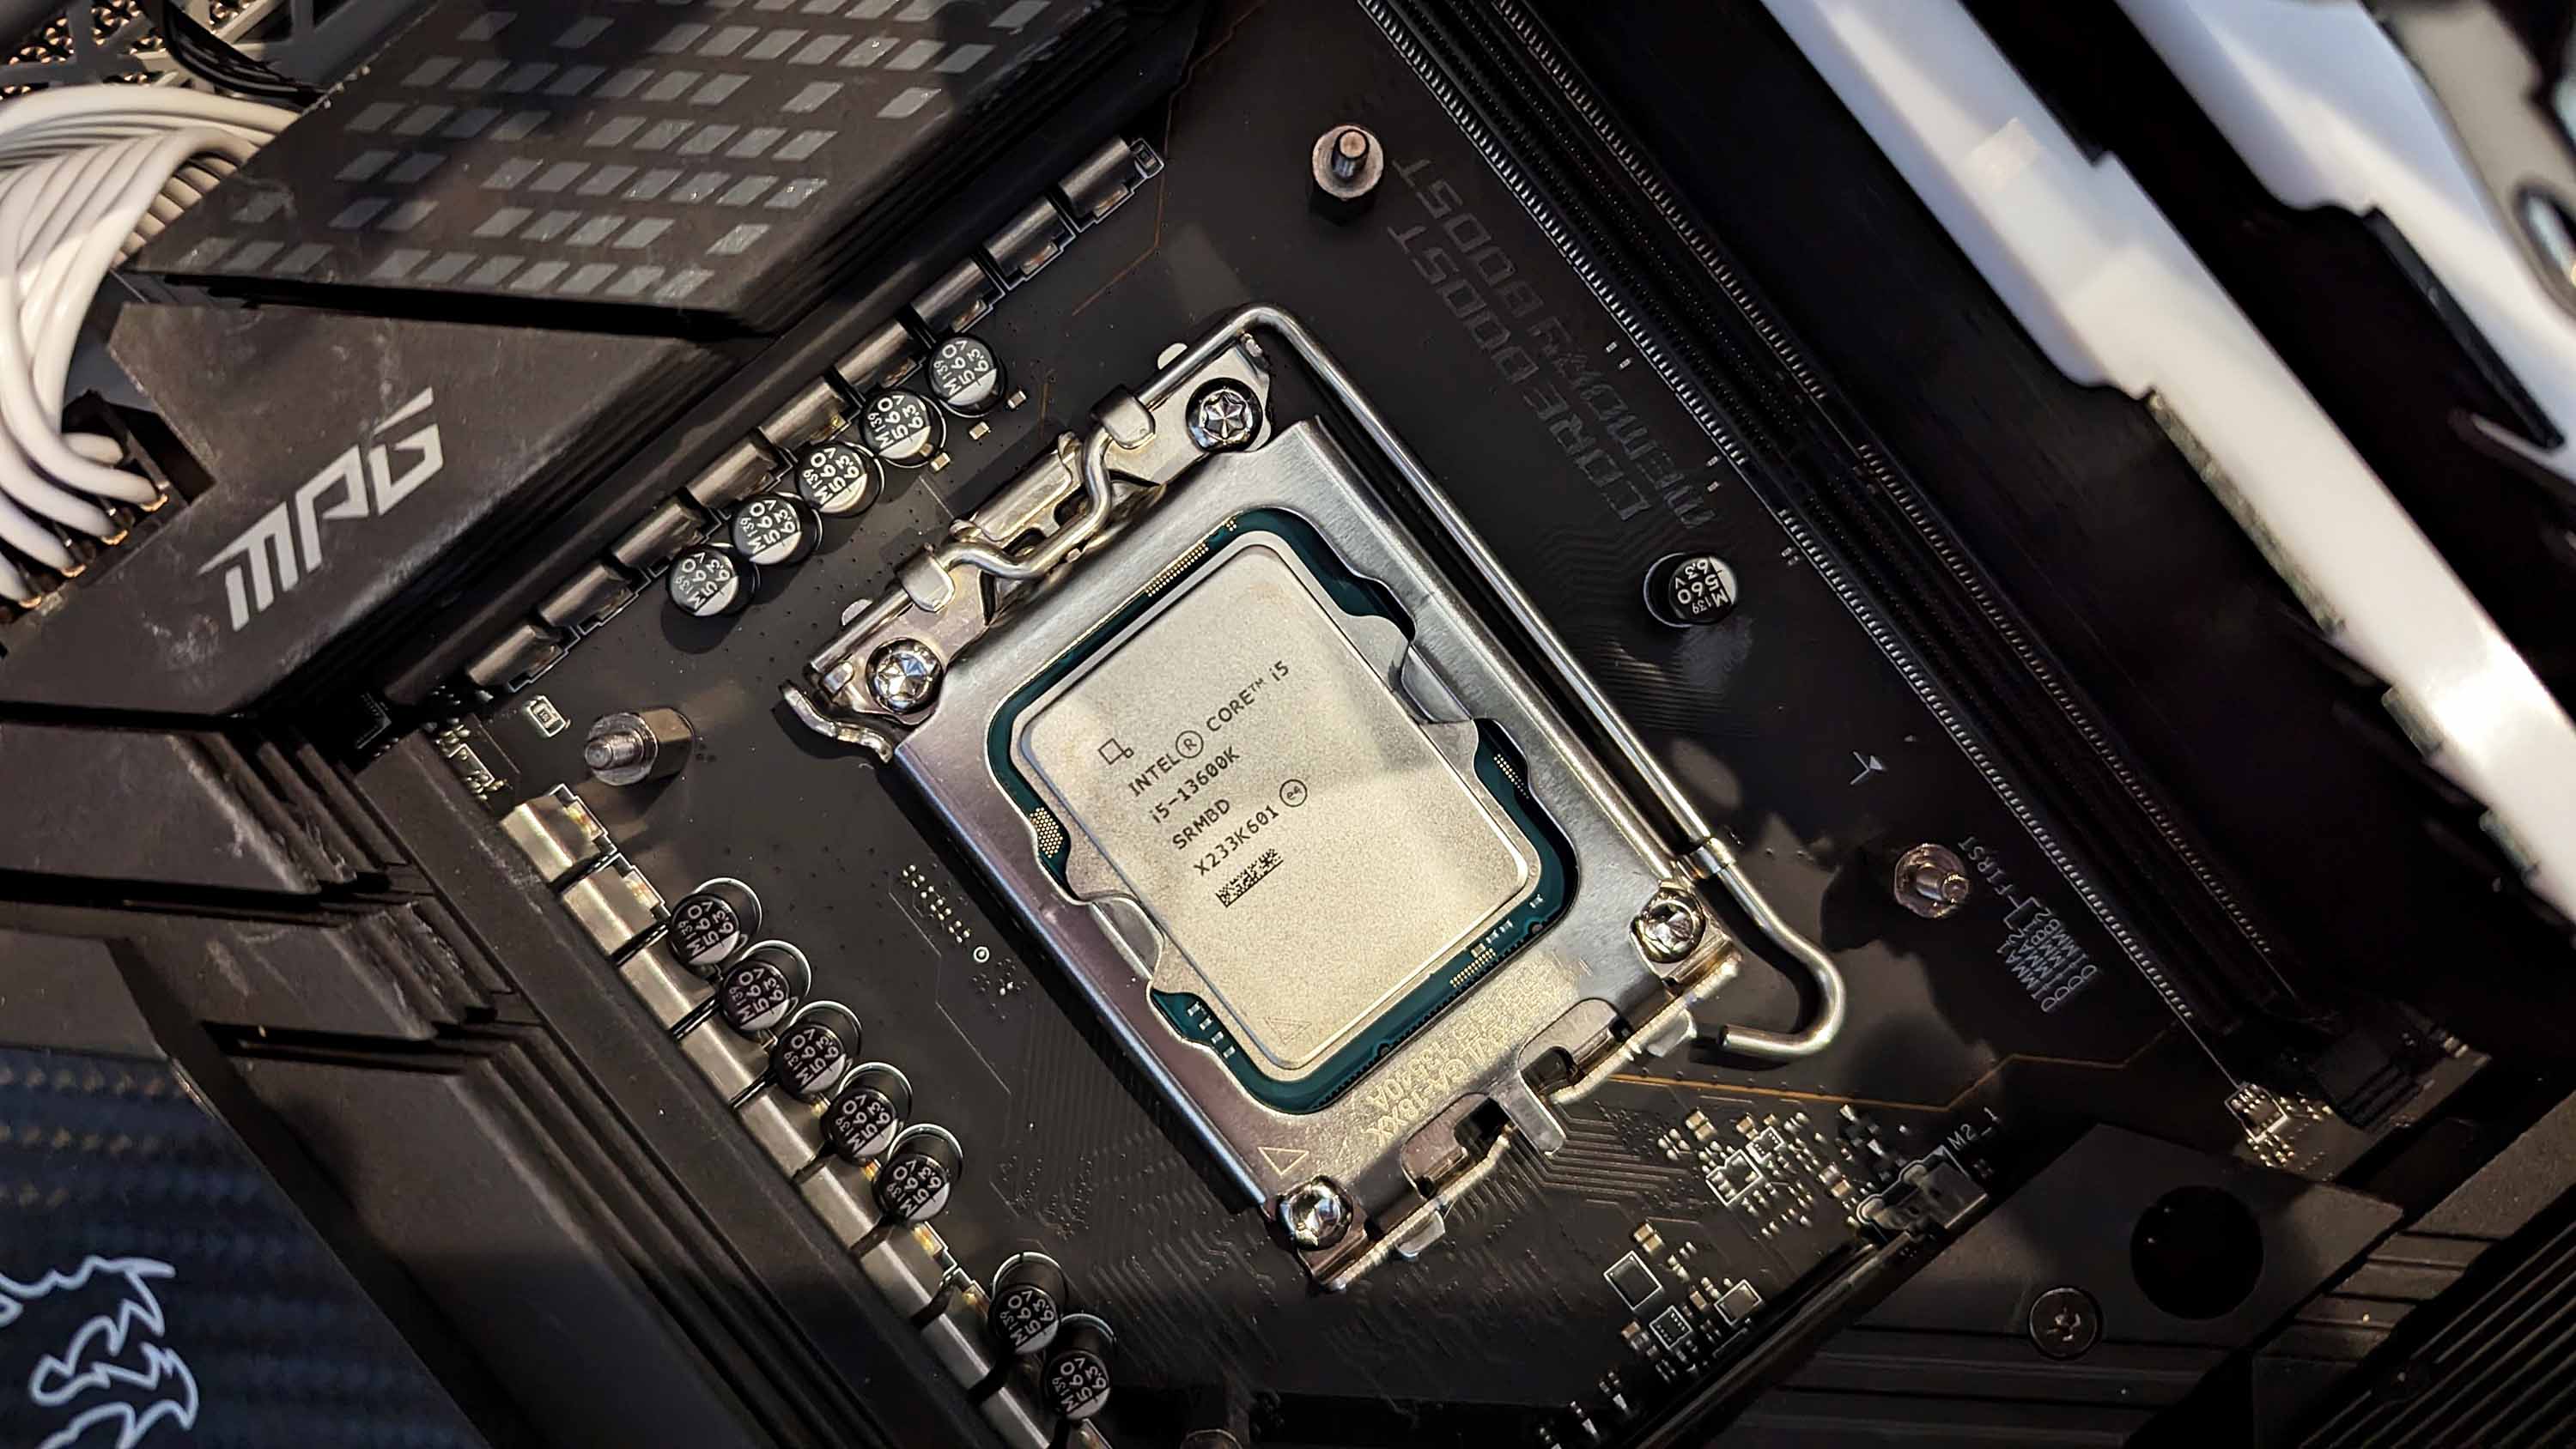 Intel Core i5-13600K review: The best mid-range desktop CPU